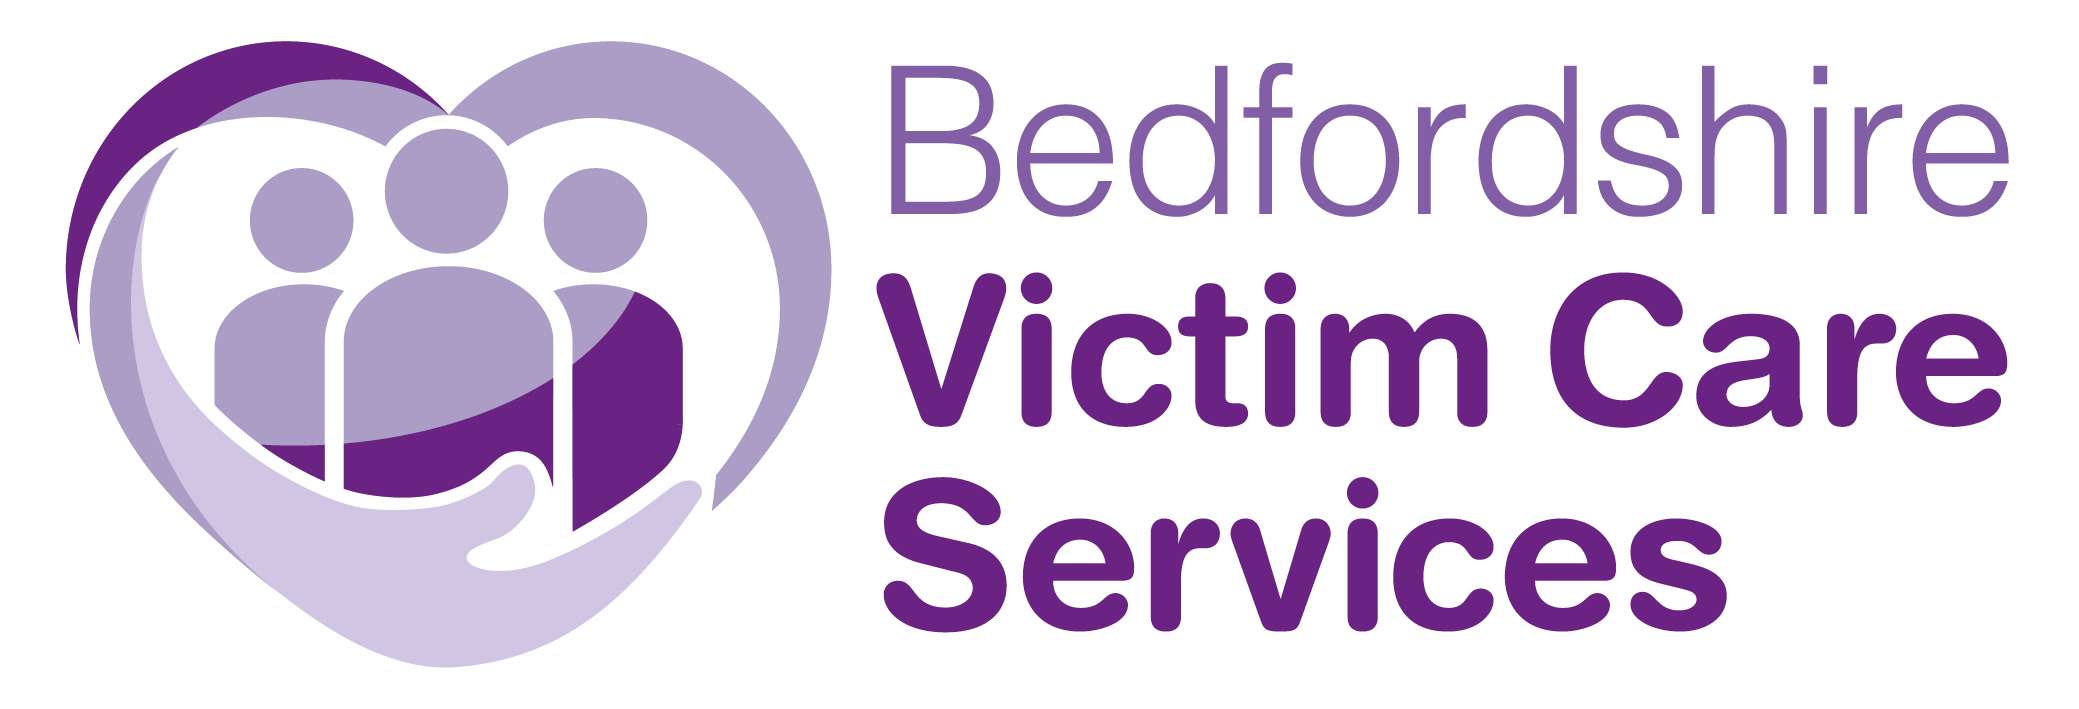 Beds Victim Care Services logo